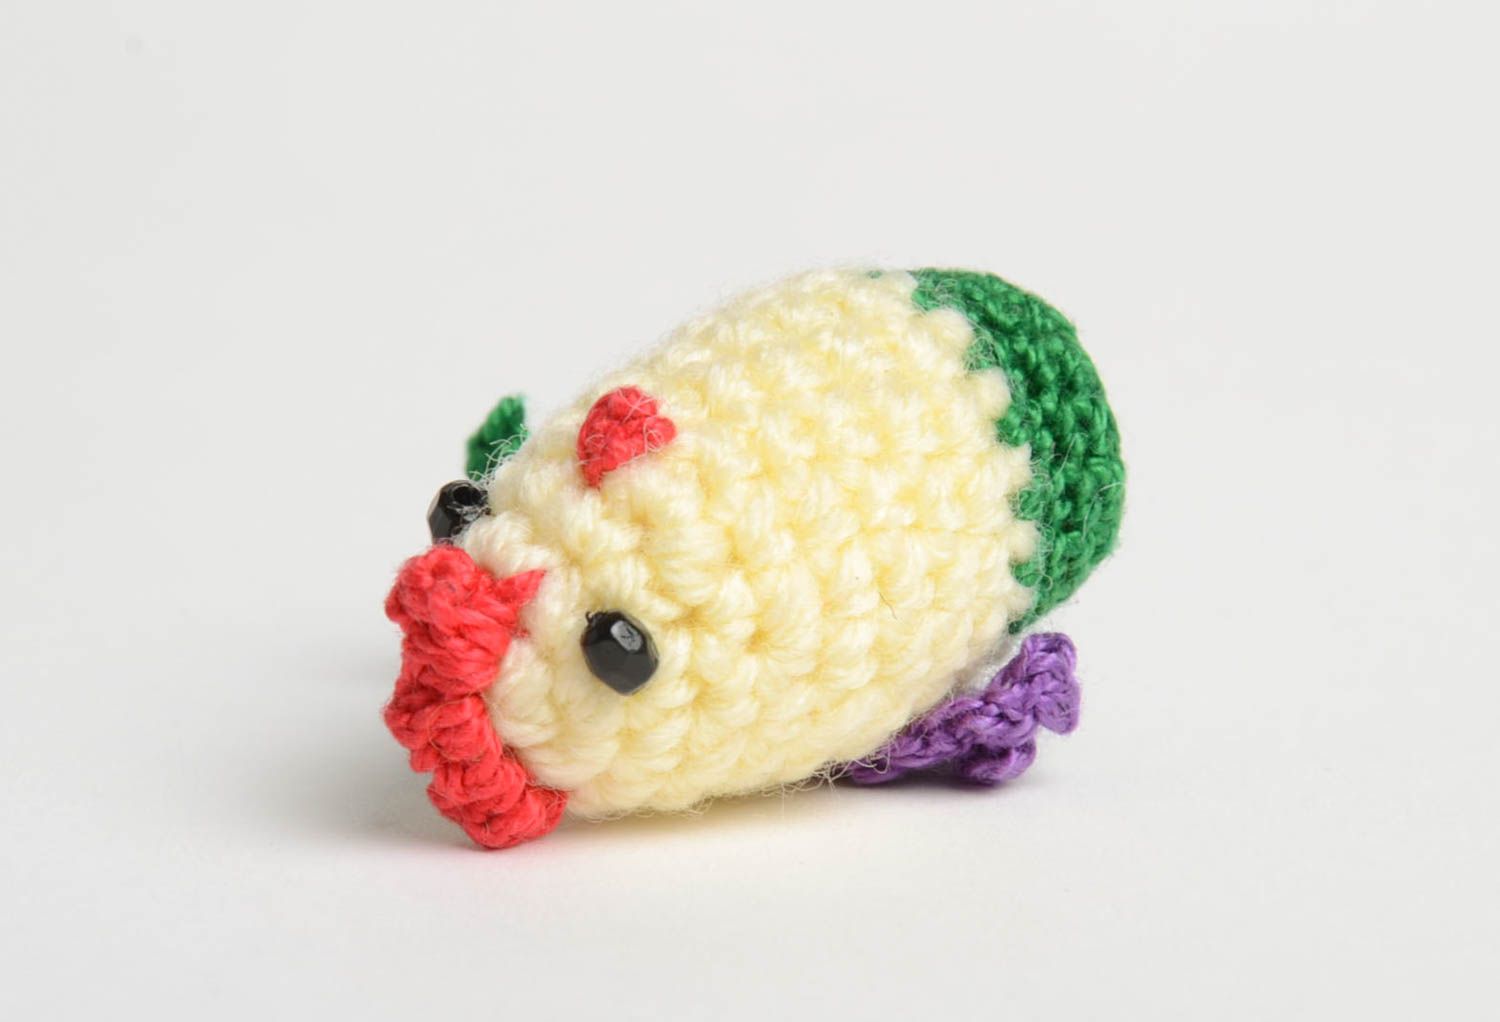 Handmade toy designer toy animal toy gift for baby nursery decor crocheted toy photo 4